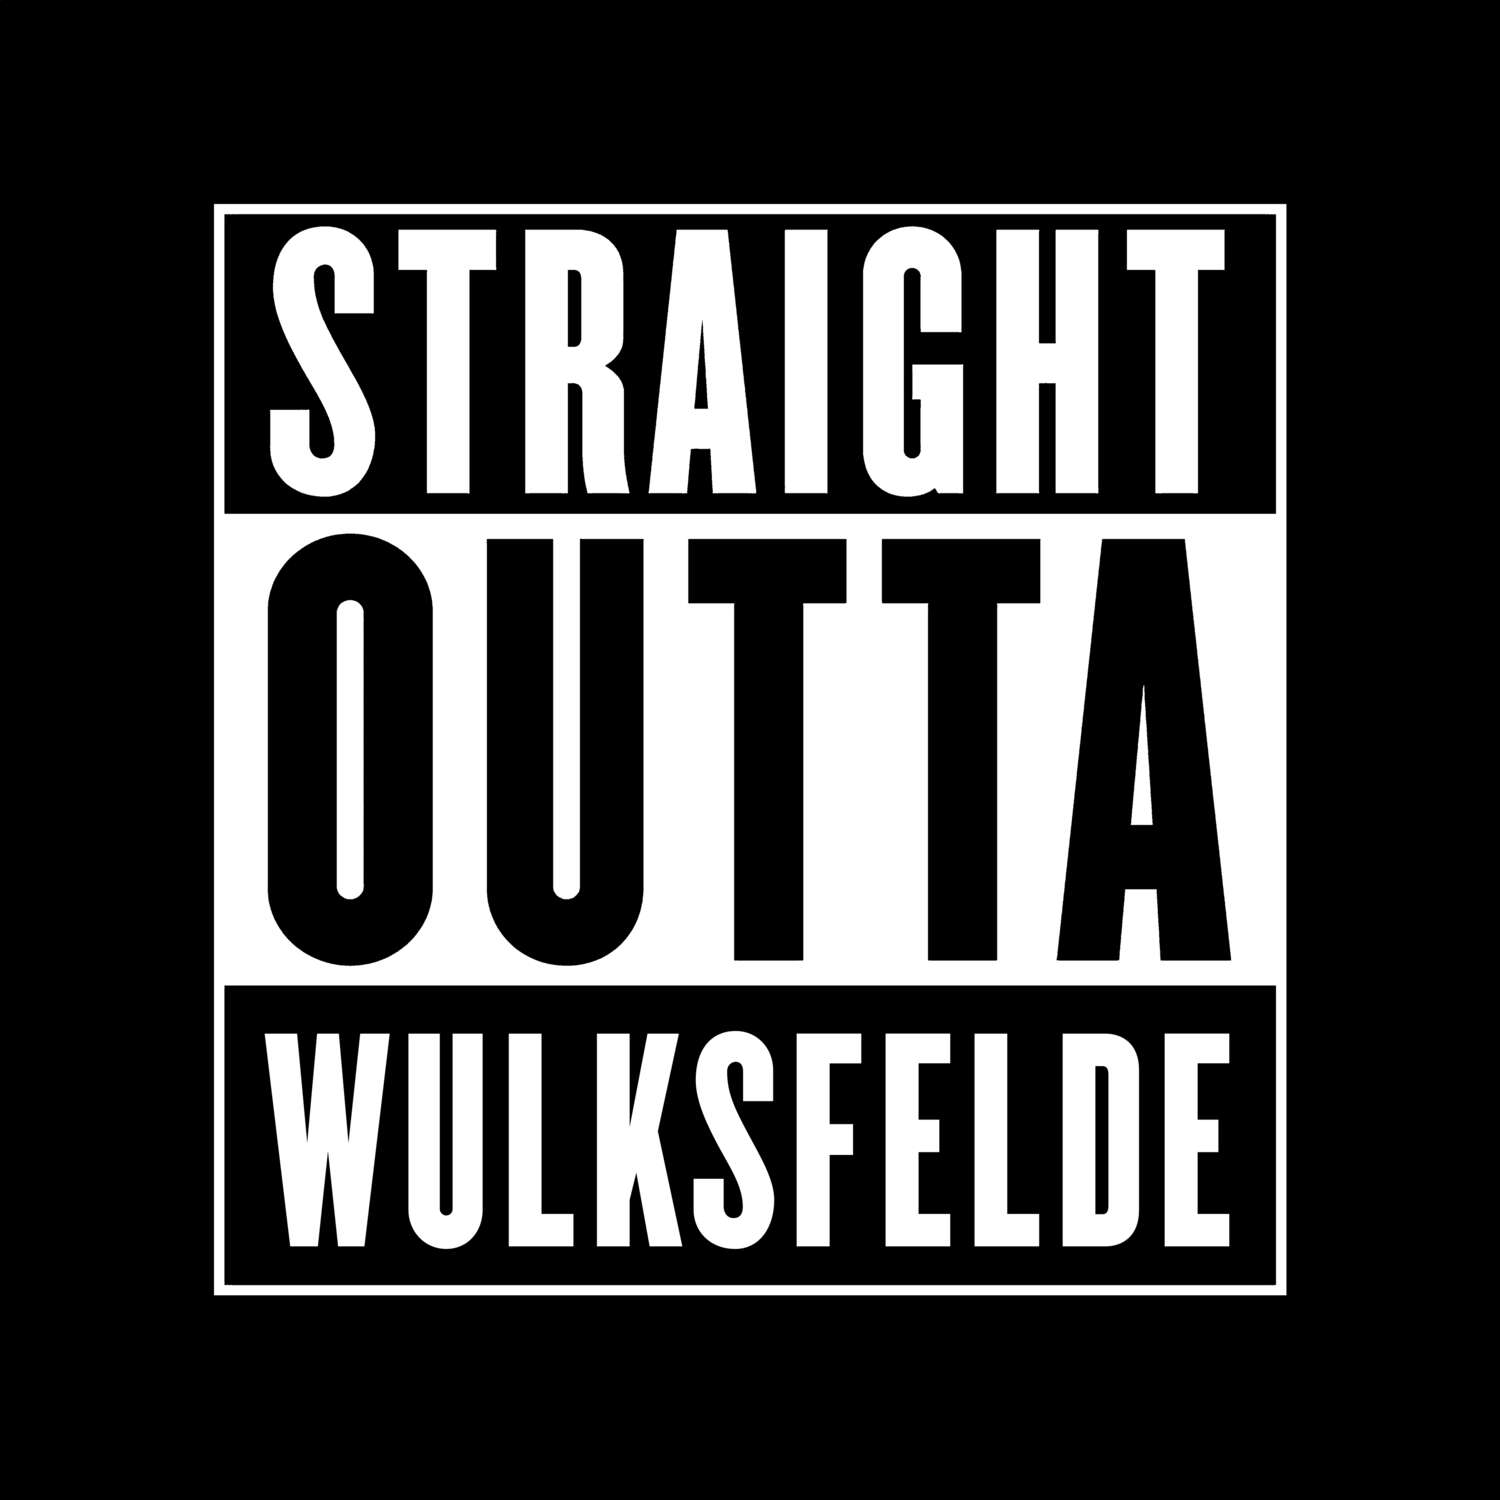 Wulksfelde T-Shirt »Straight Outta«